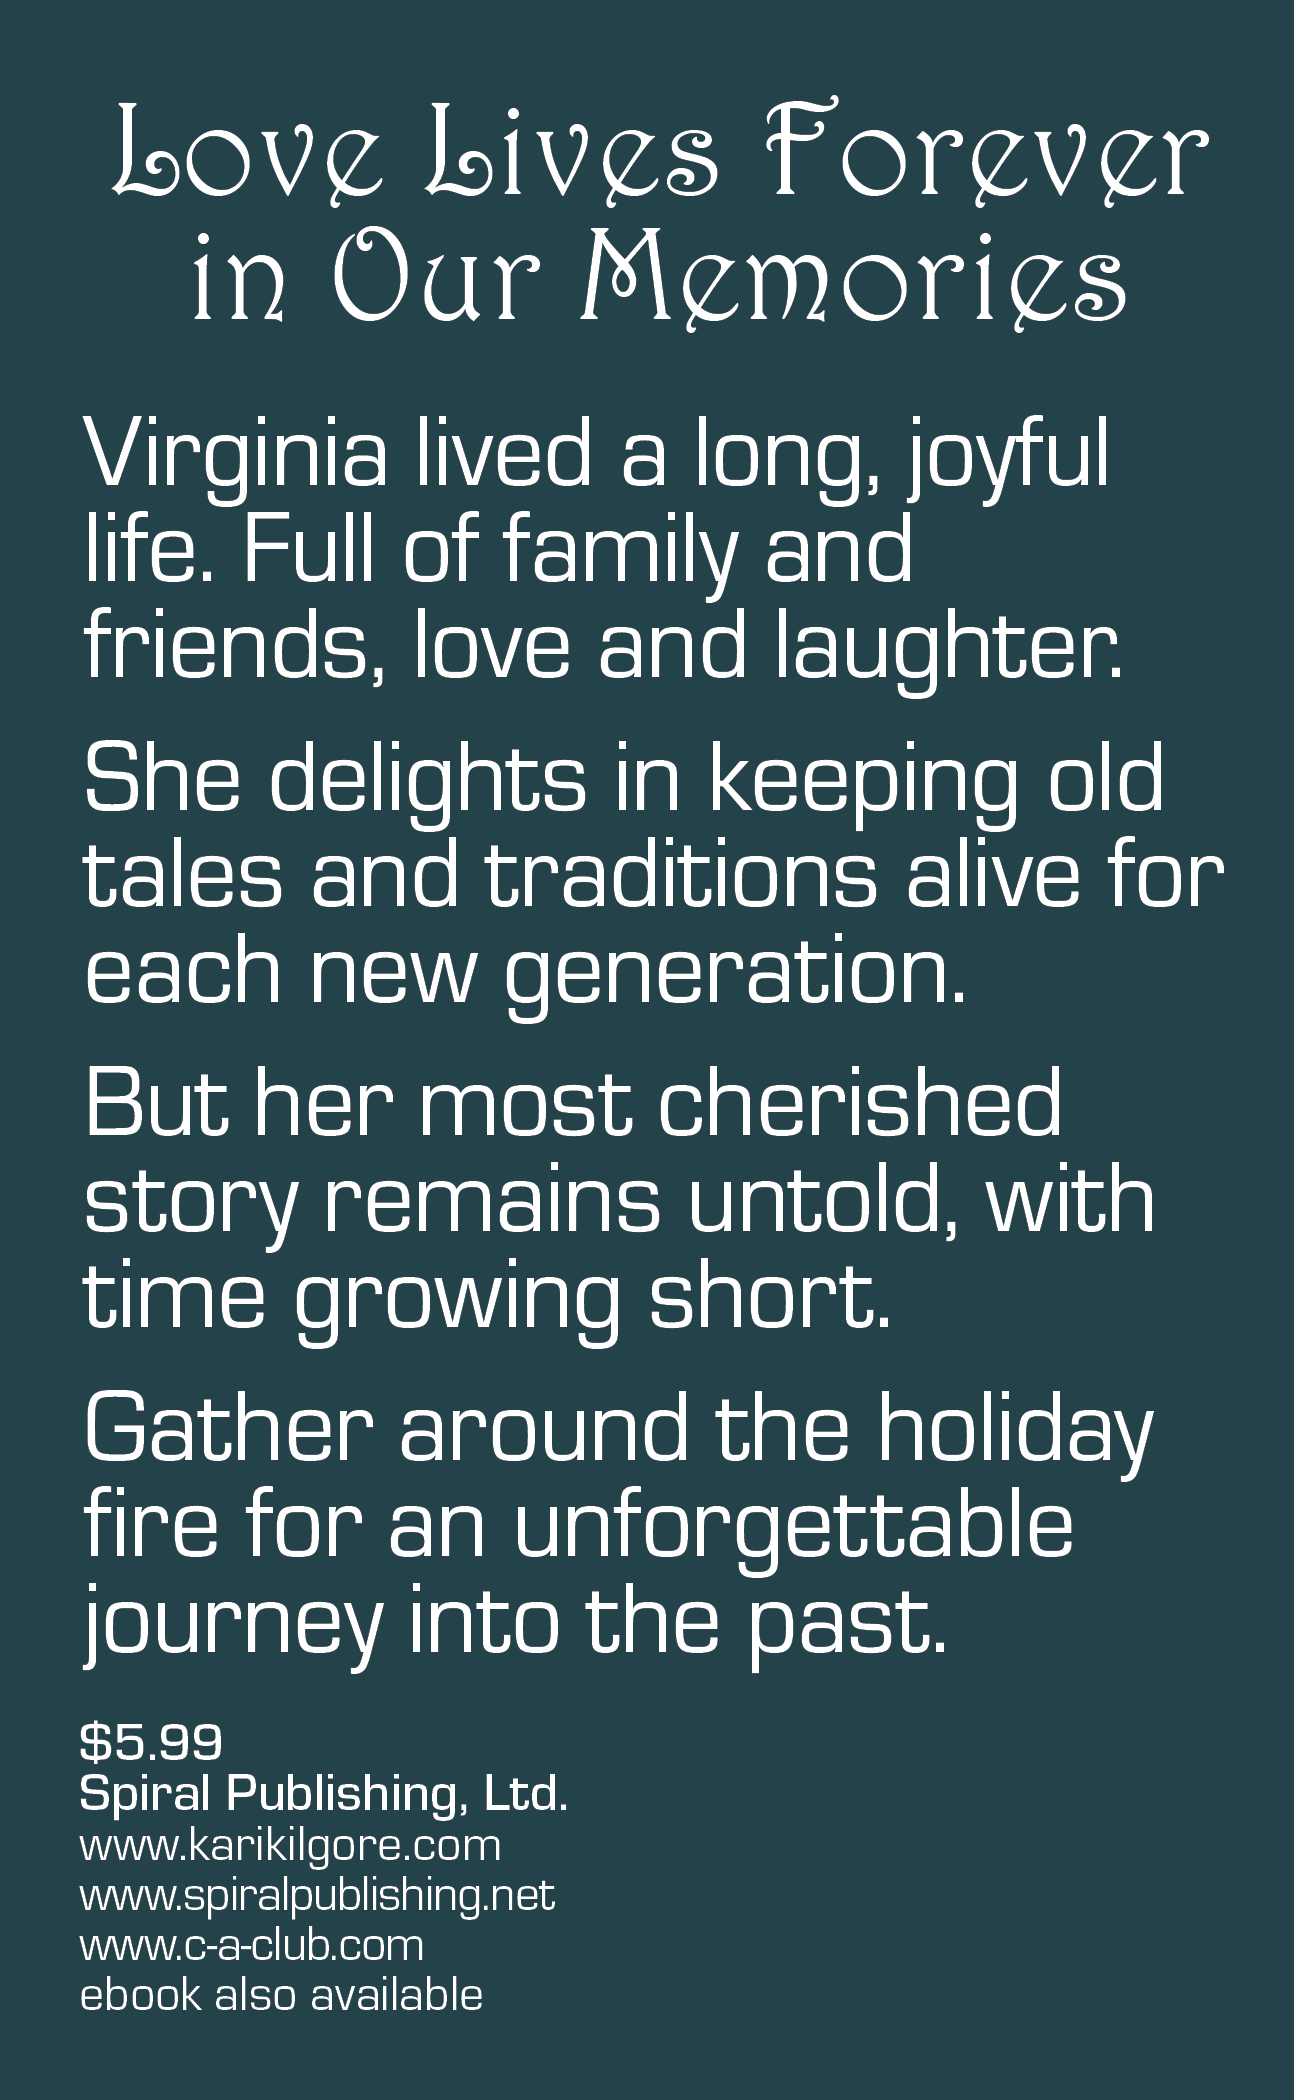 Virginia's Last Old Christmas Eve